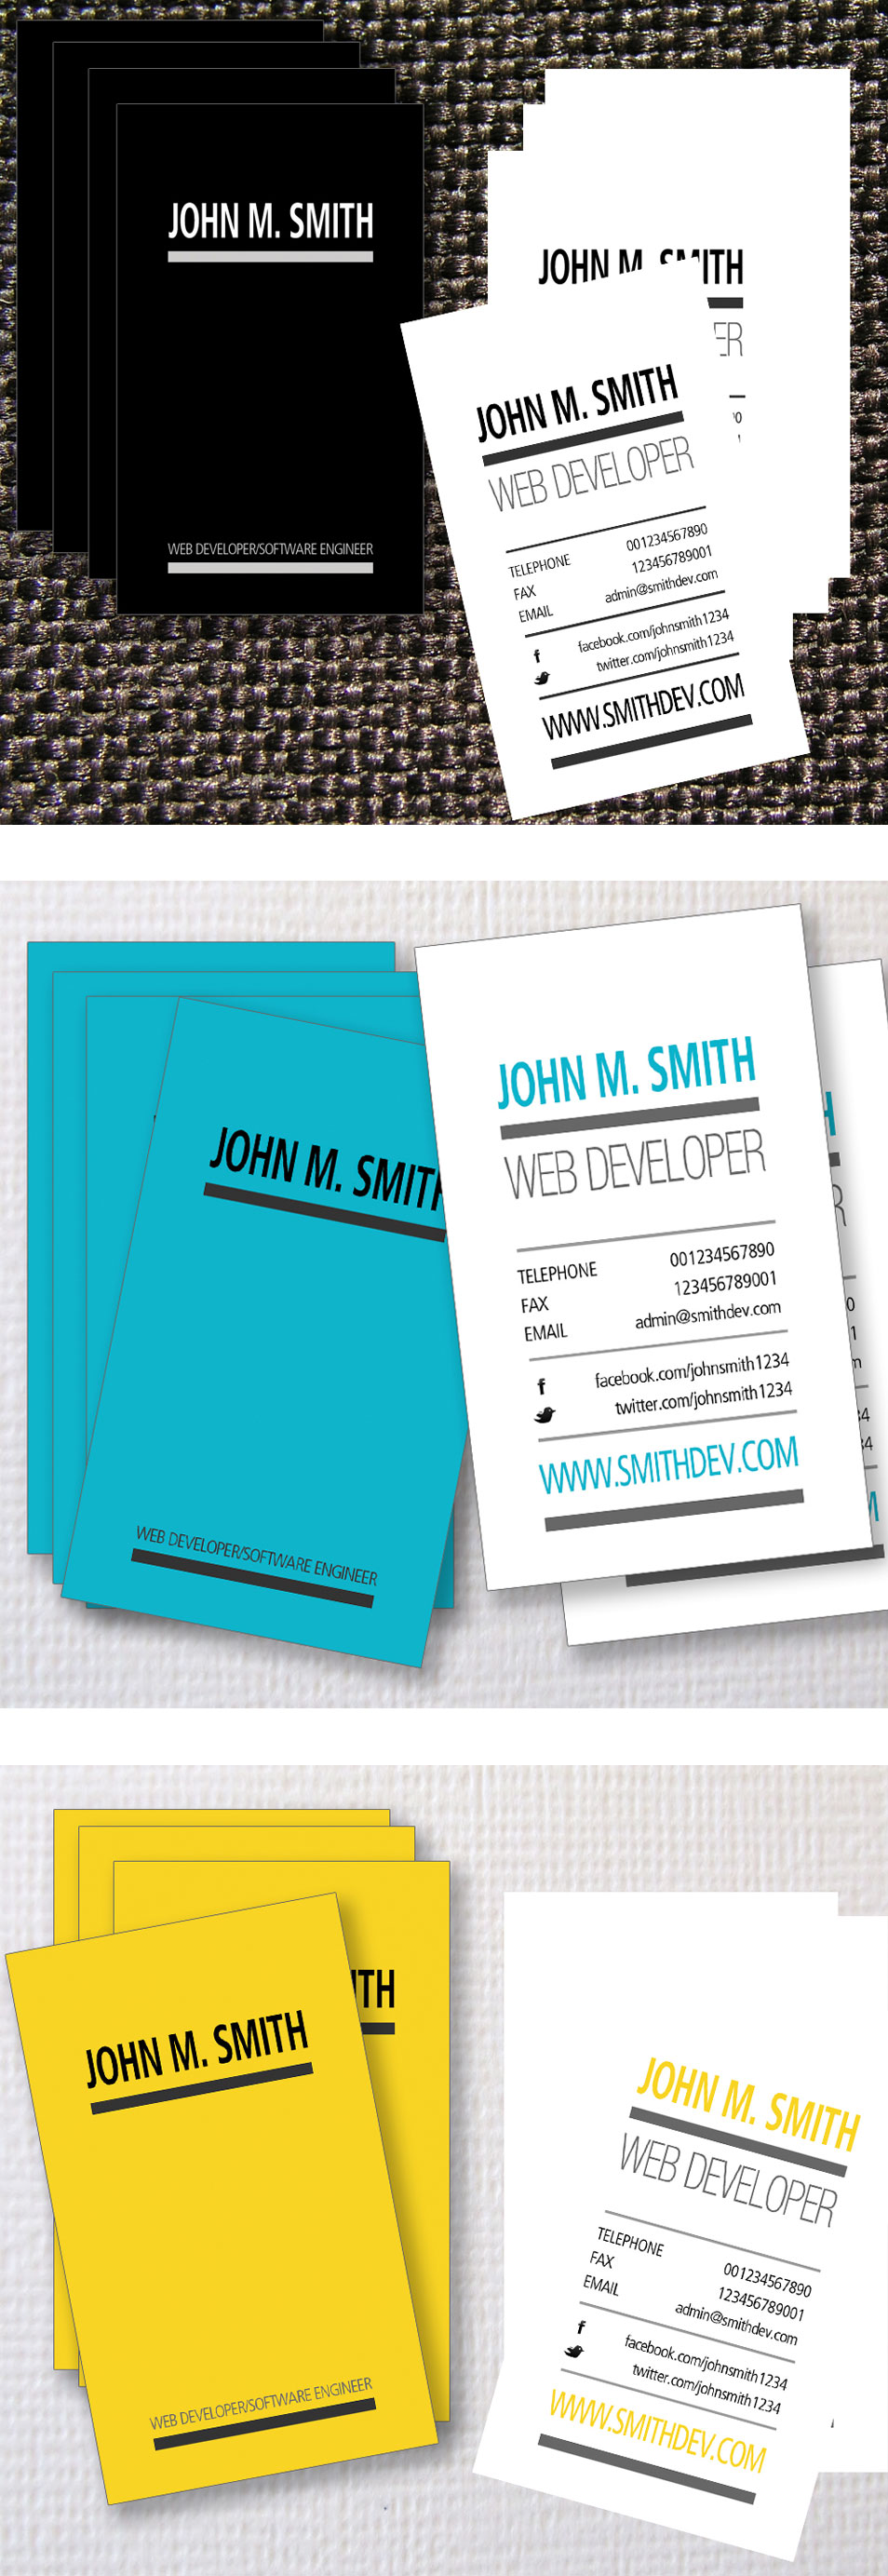 3 Typographic Web Developer Business Card Templates